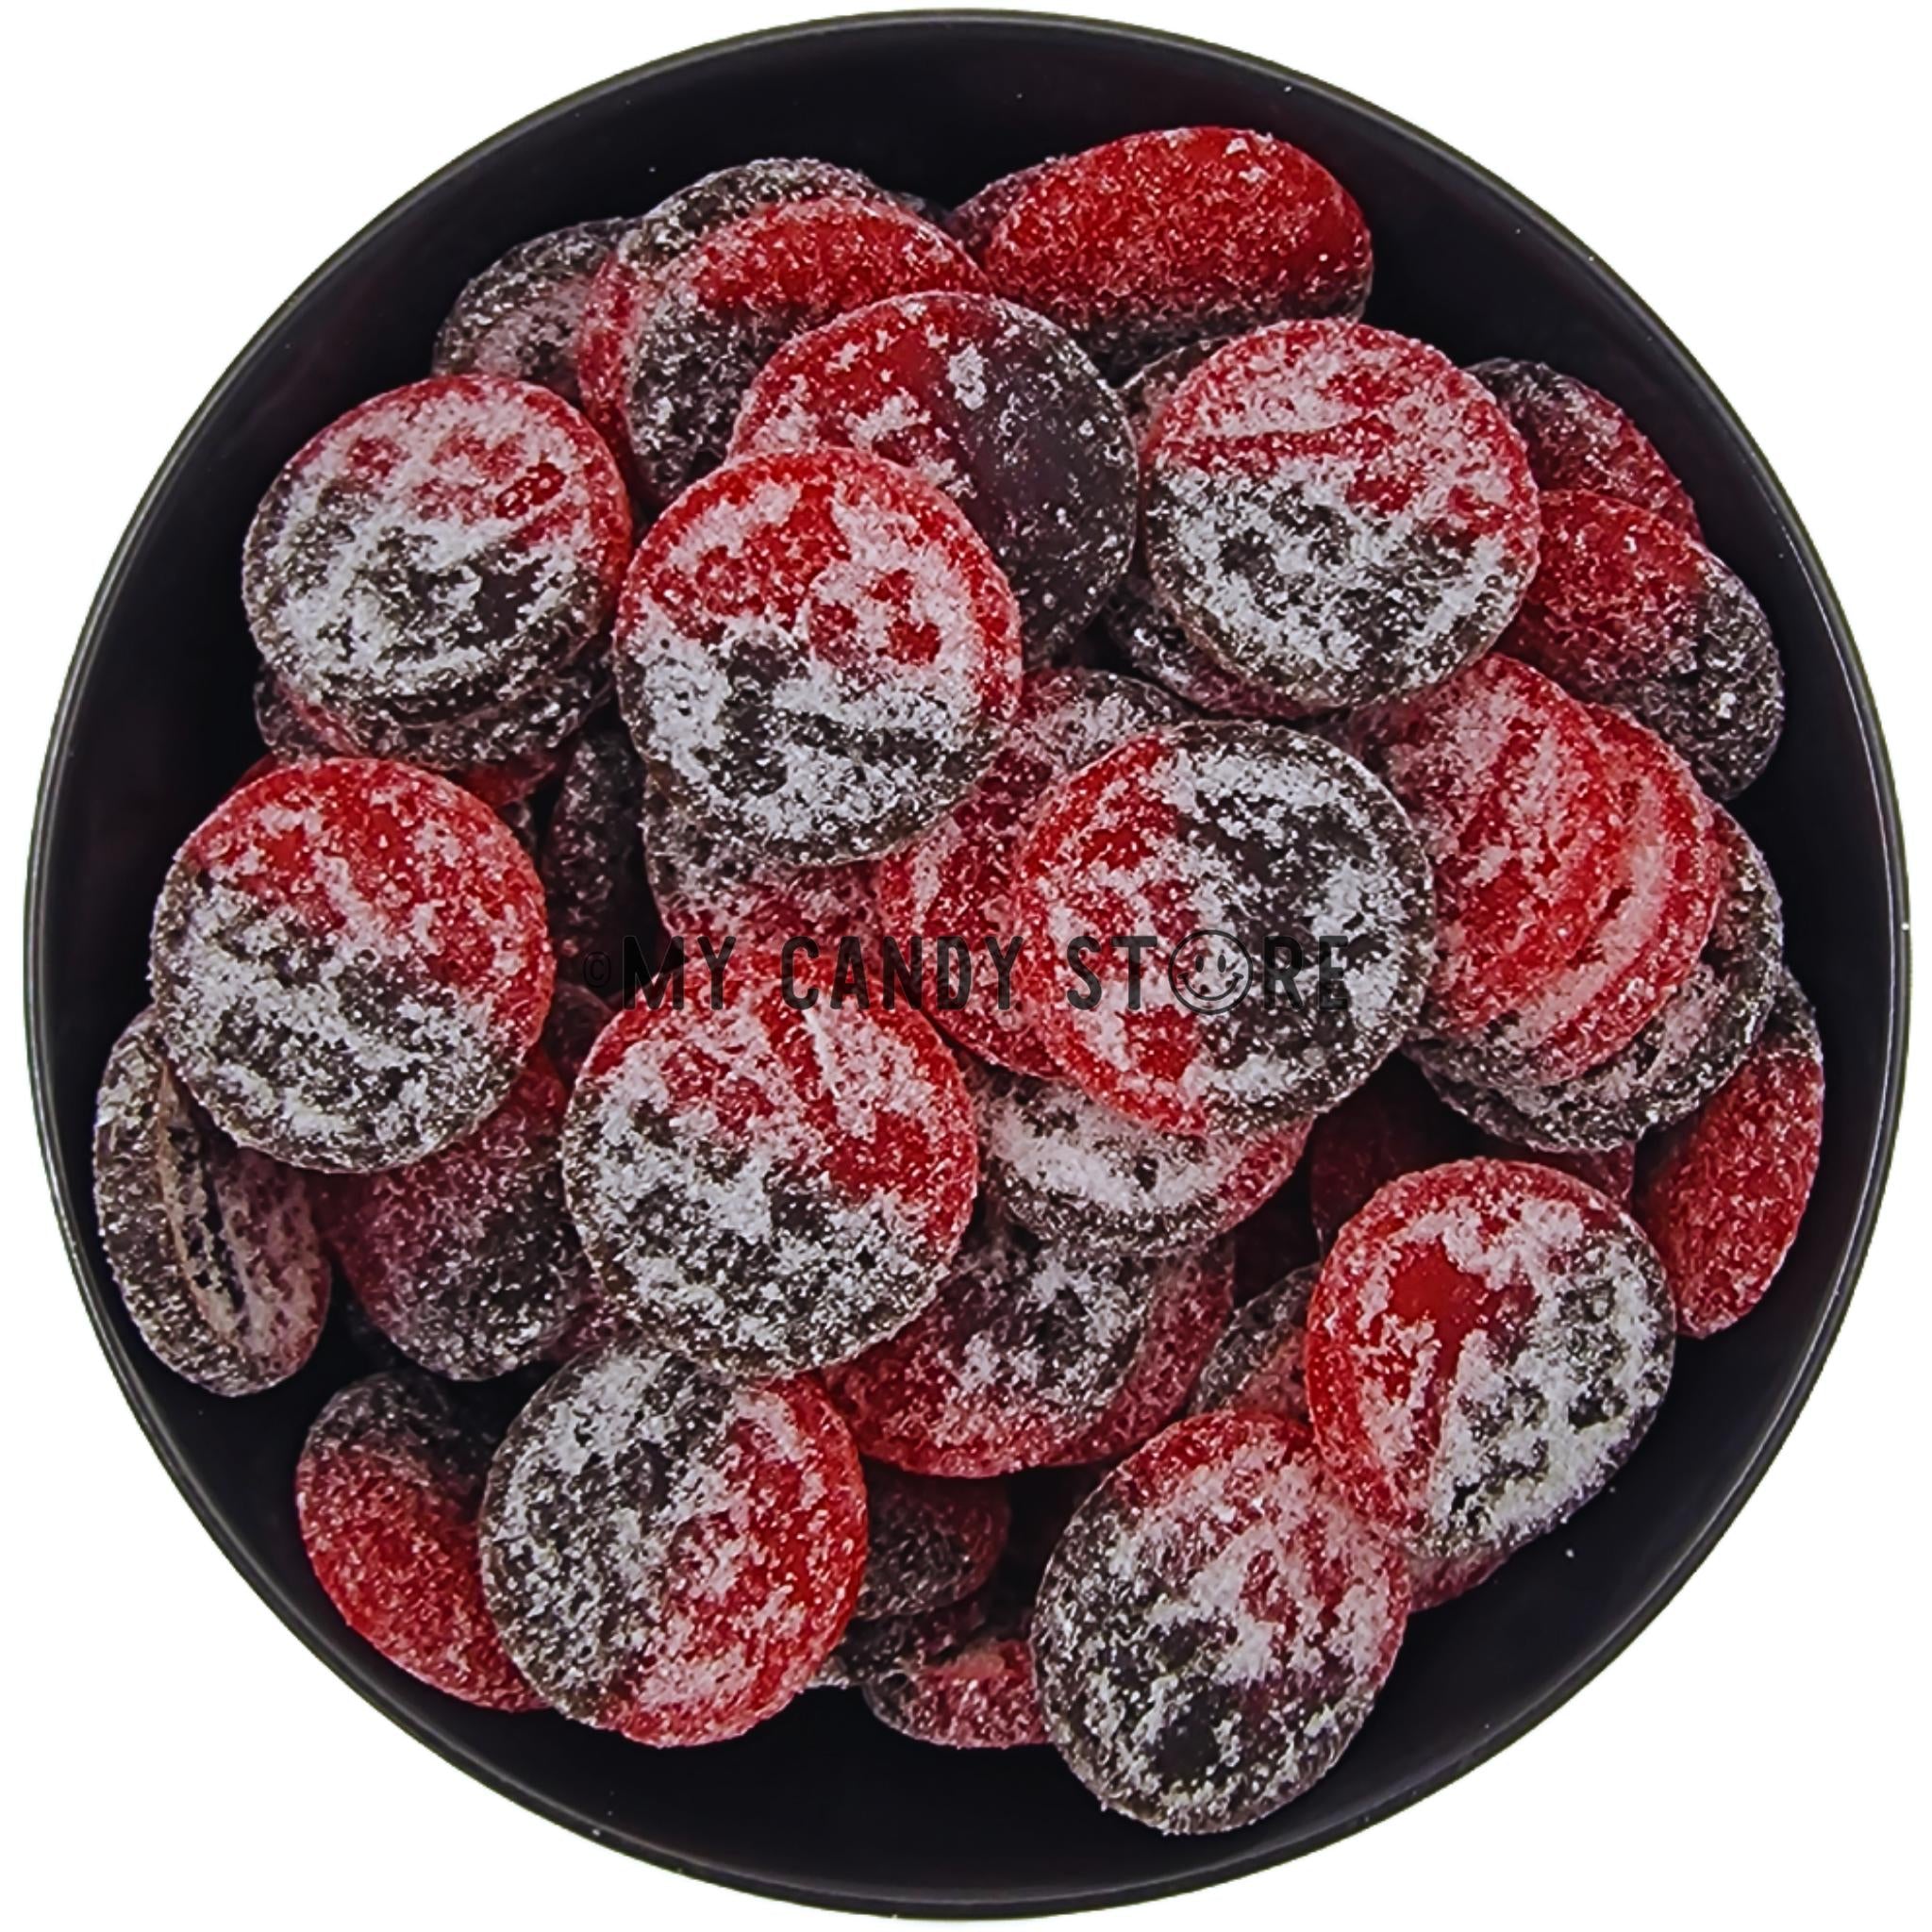 Strawberry/Liquorice Coins